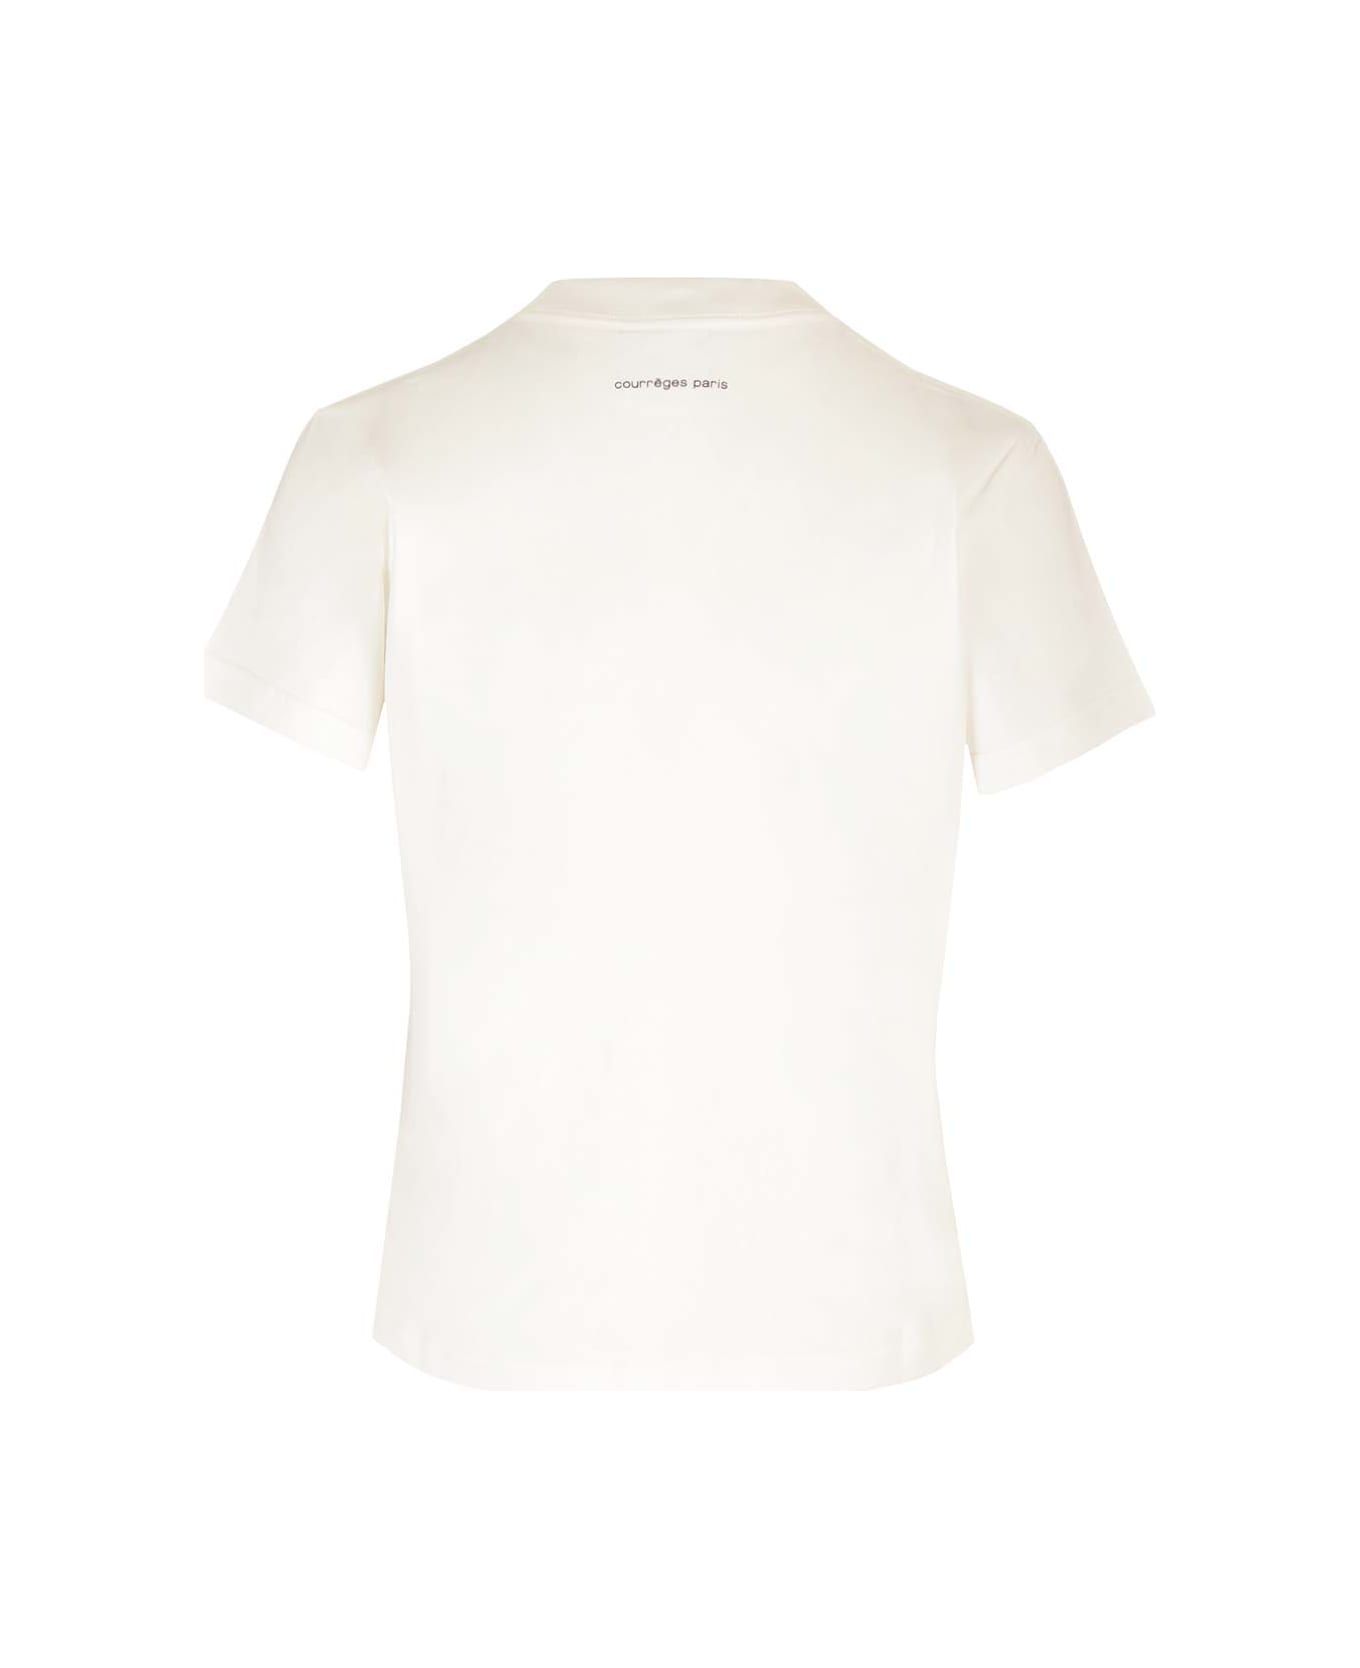 Courrèges Heritage T-shirt - White